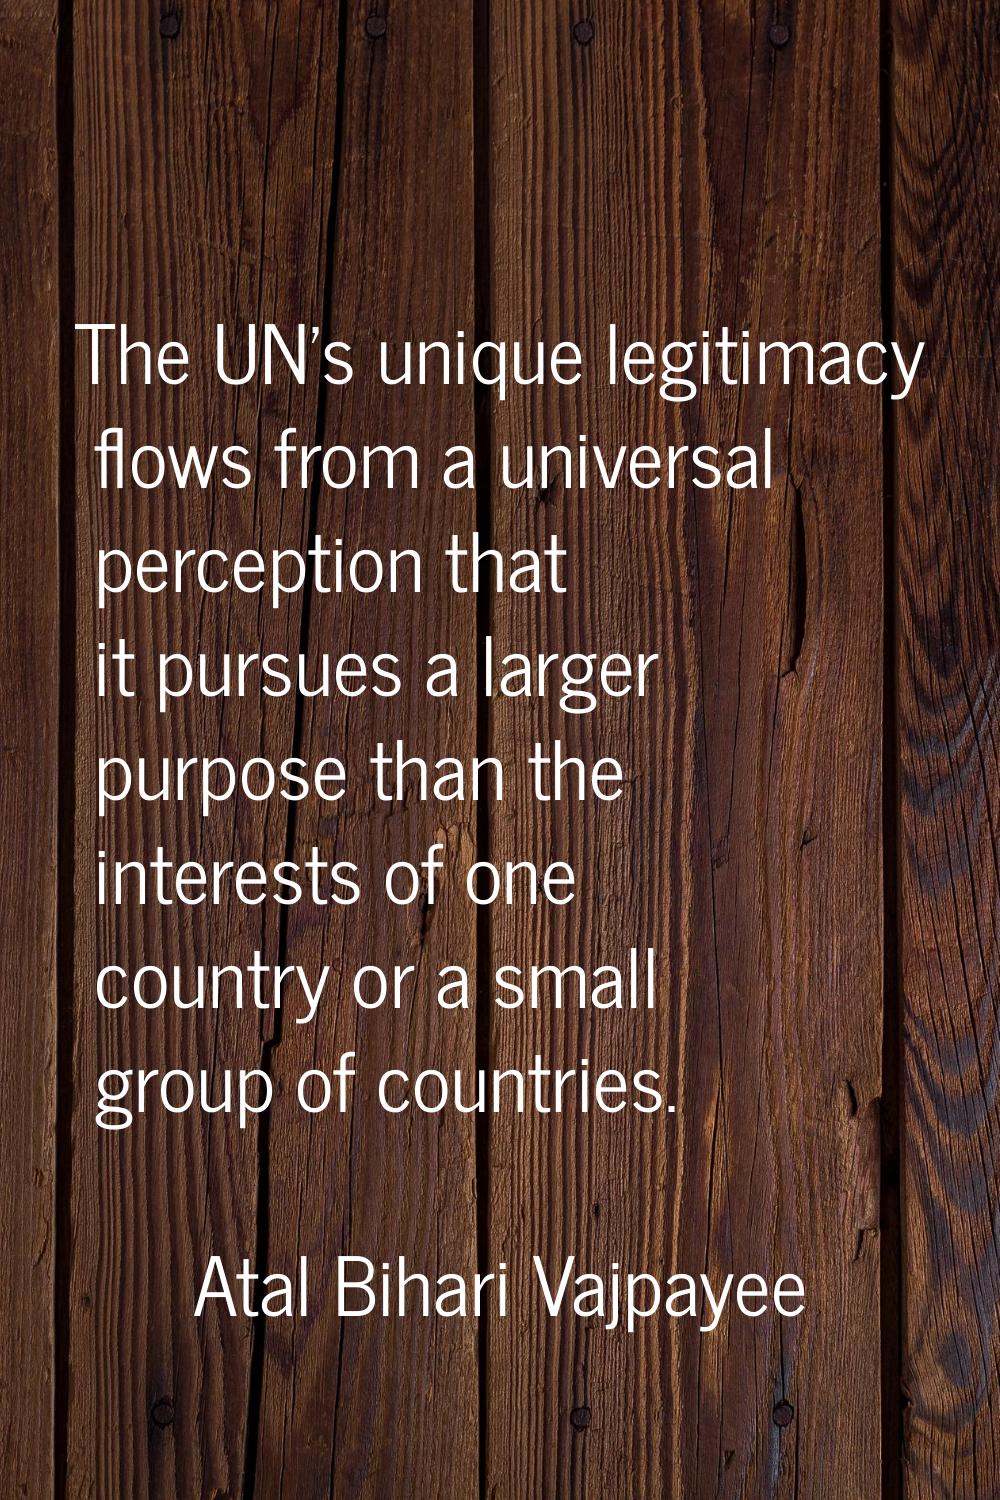 The UN's unique legitimacy flows from a universal perception that it pursues a larger purpose than 